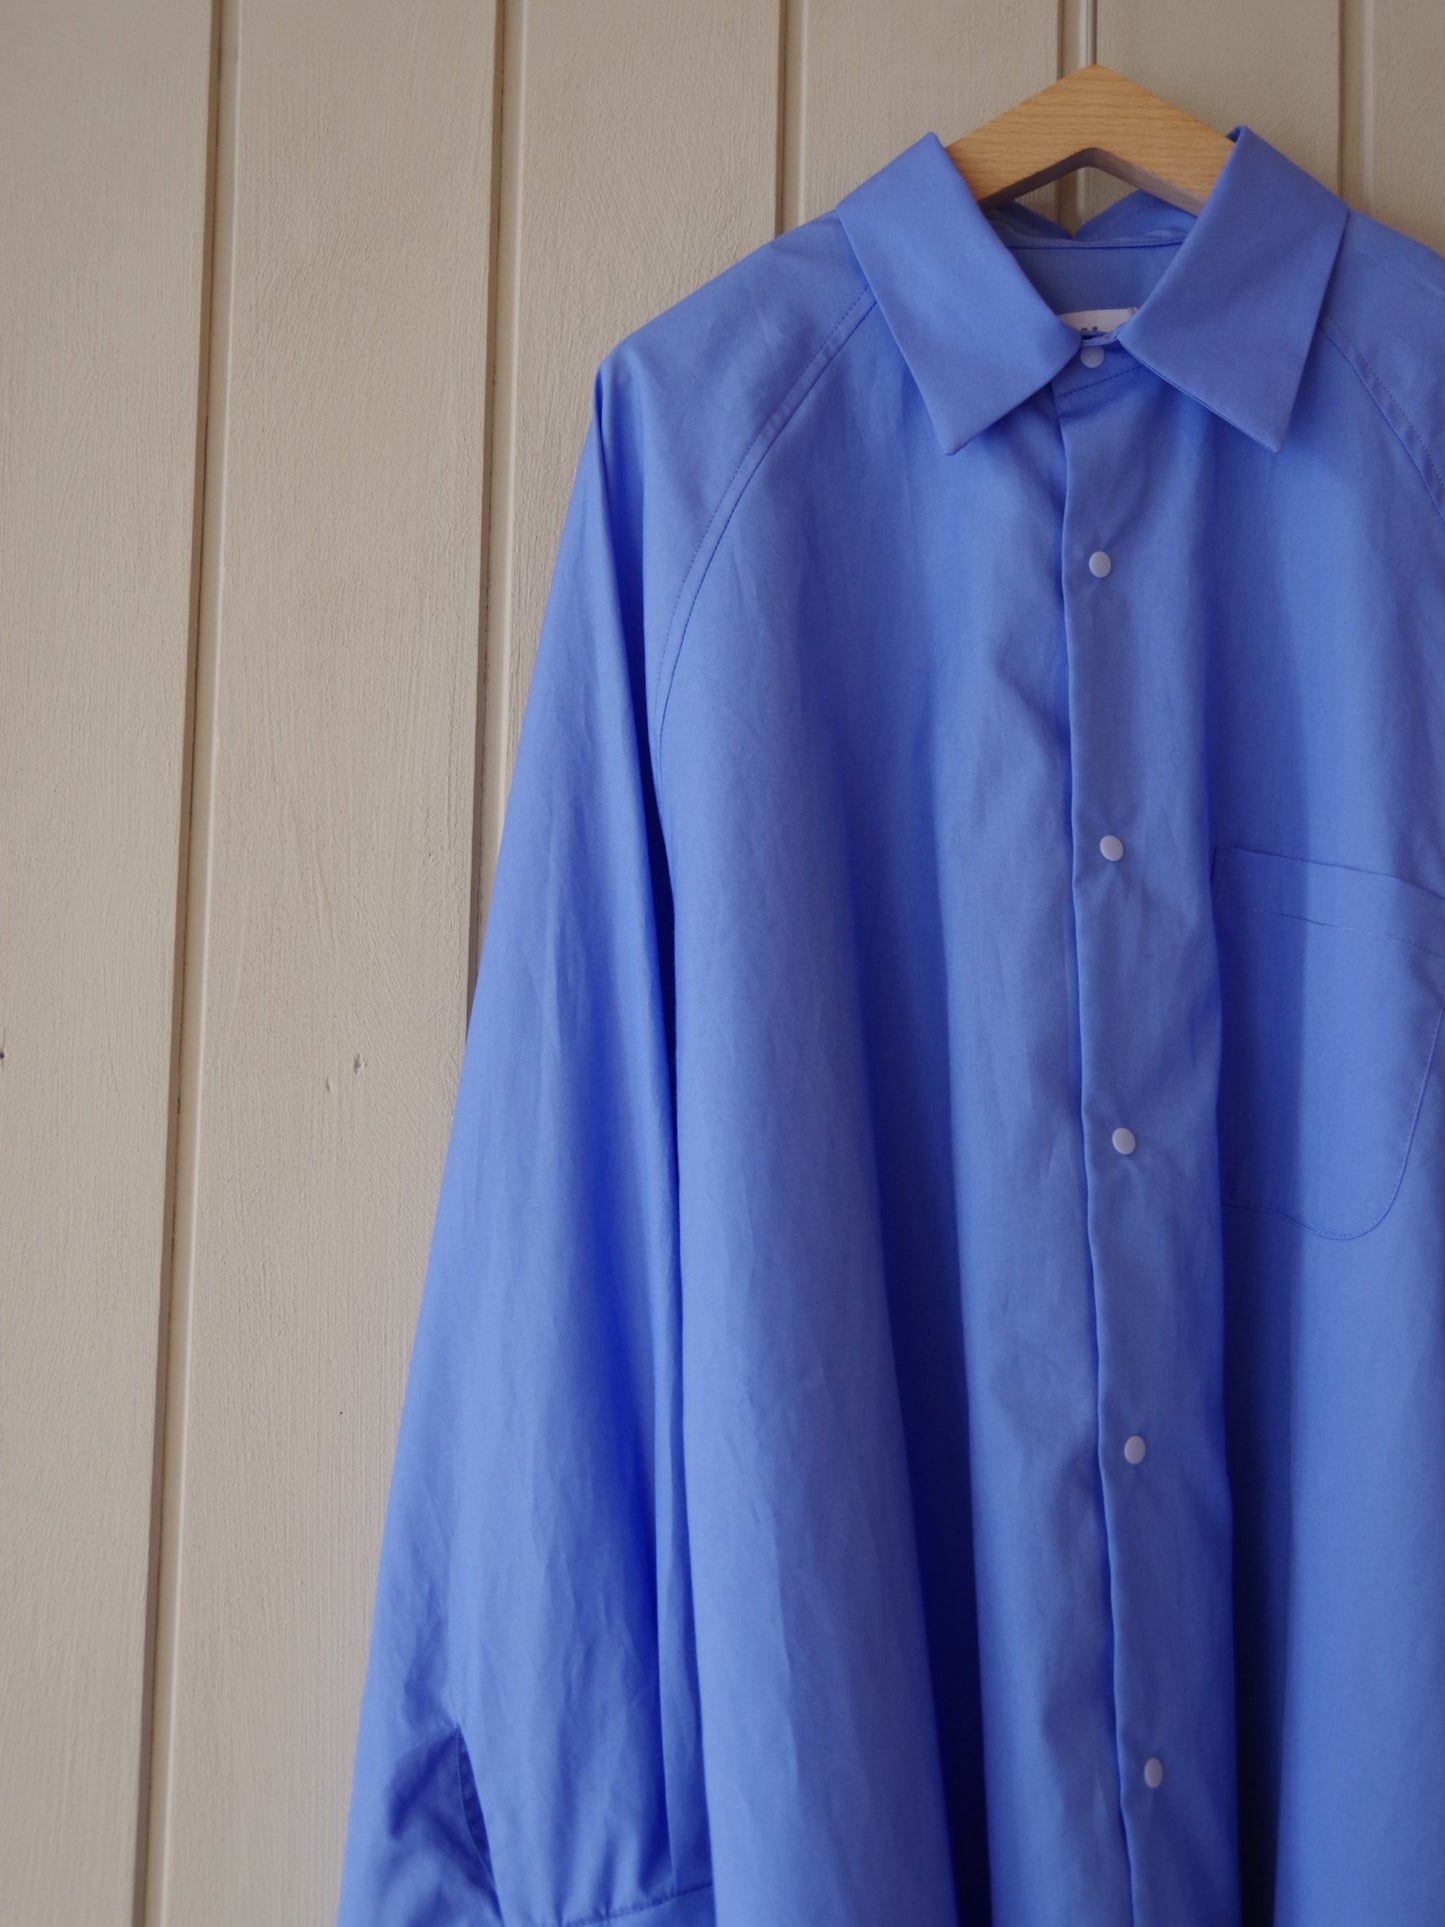 100/2 cotton broad raglan sleeve shirt |itochi